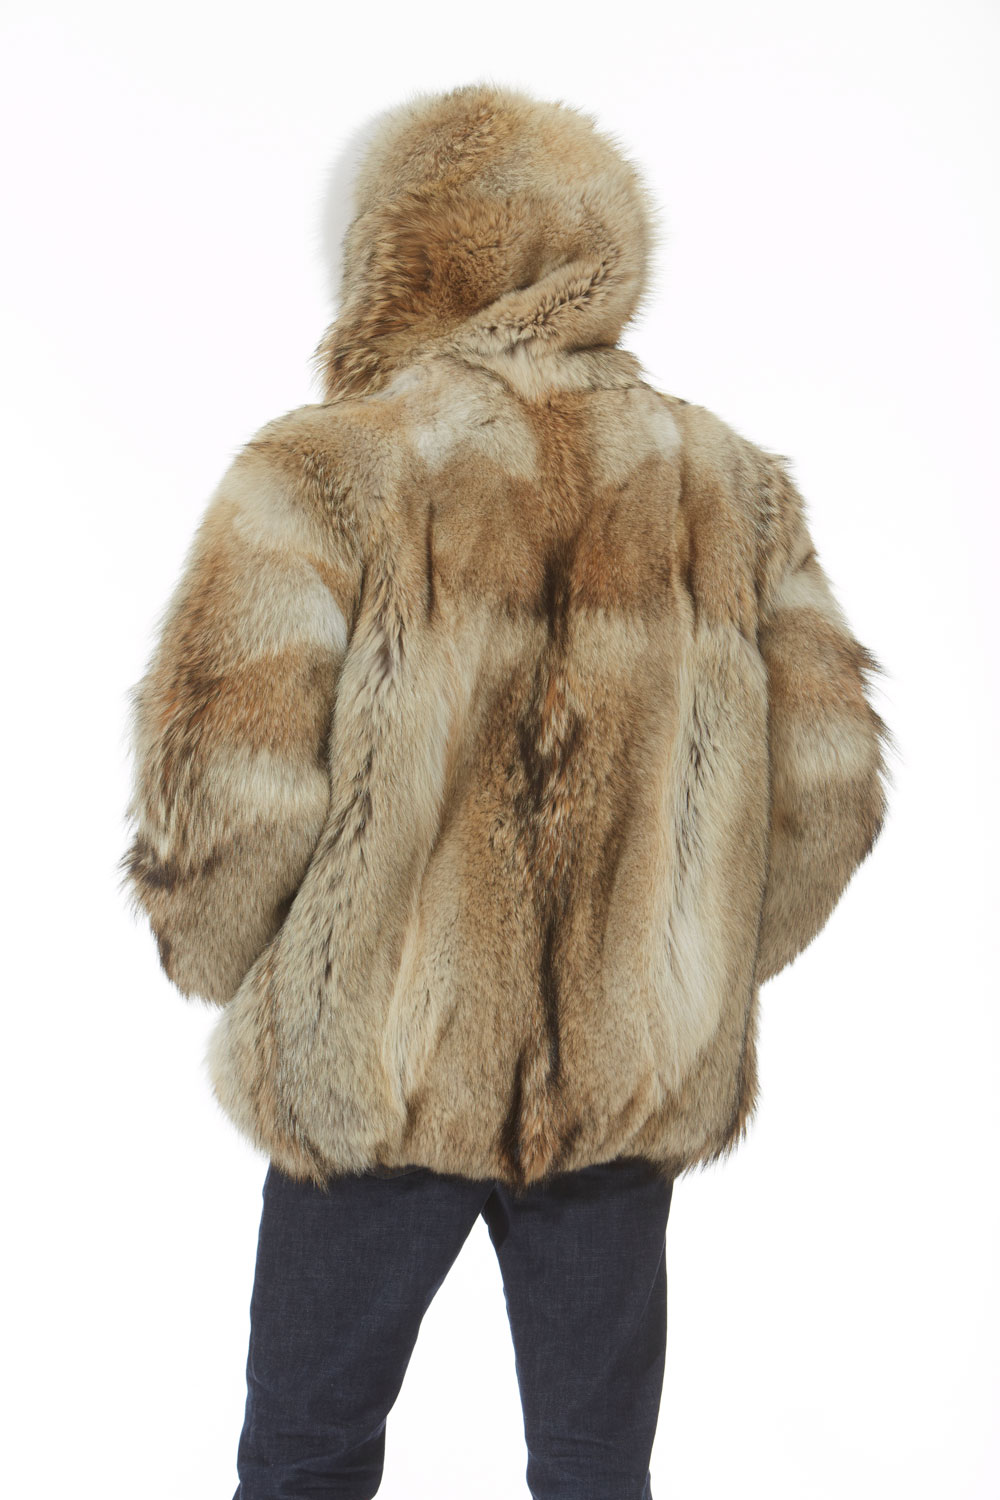 Men's Coyote Fur Jacket White Fox Trim Hood 7778 – MARC KAUFMAN FURS